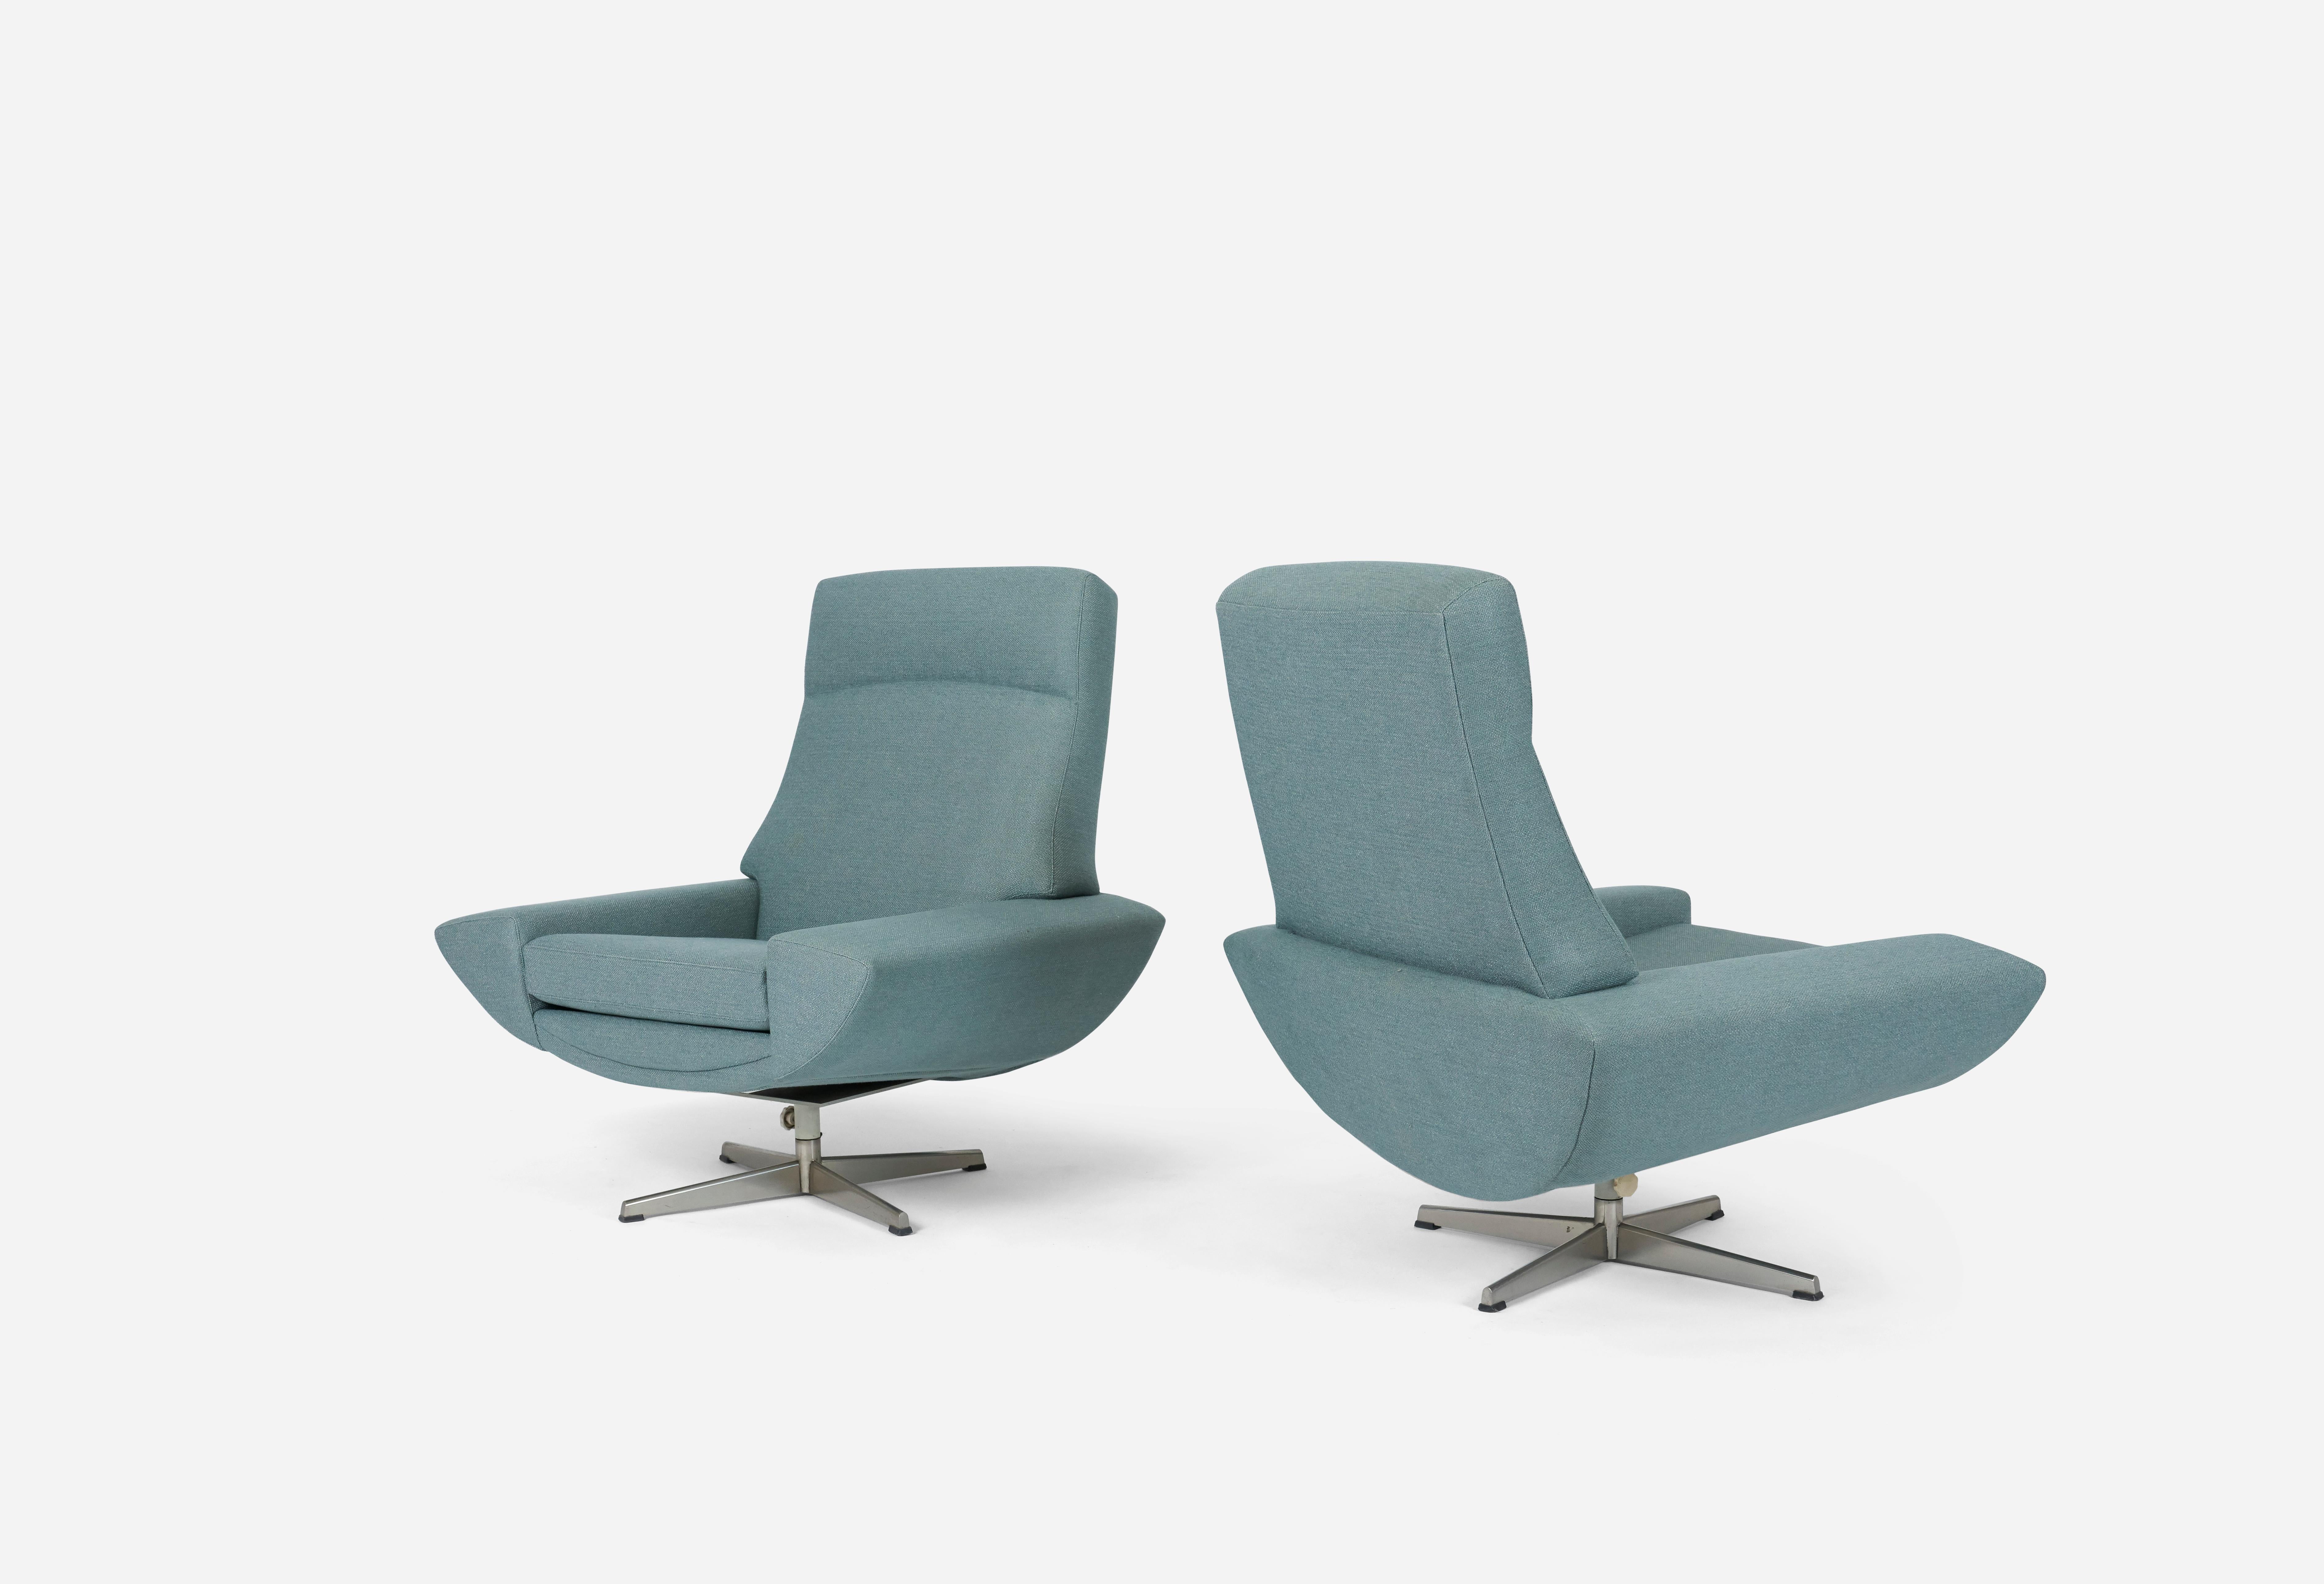 Capri Swivel Chairs by Johannes Andersen for Trensum, 1958 (Mitte des 20. Jahrhunderts)